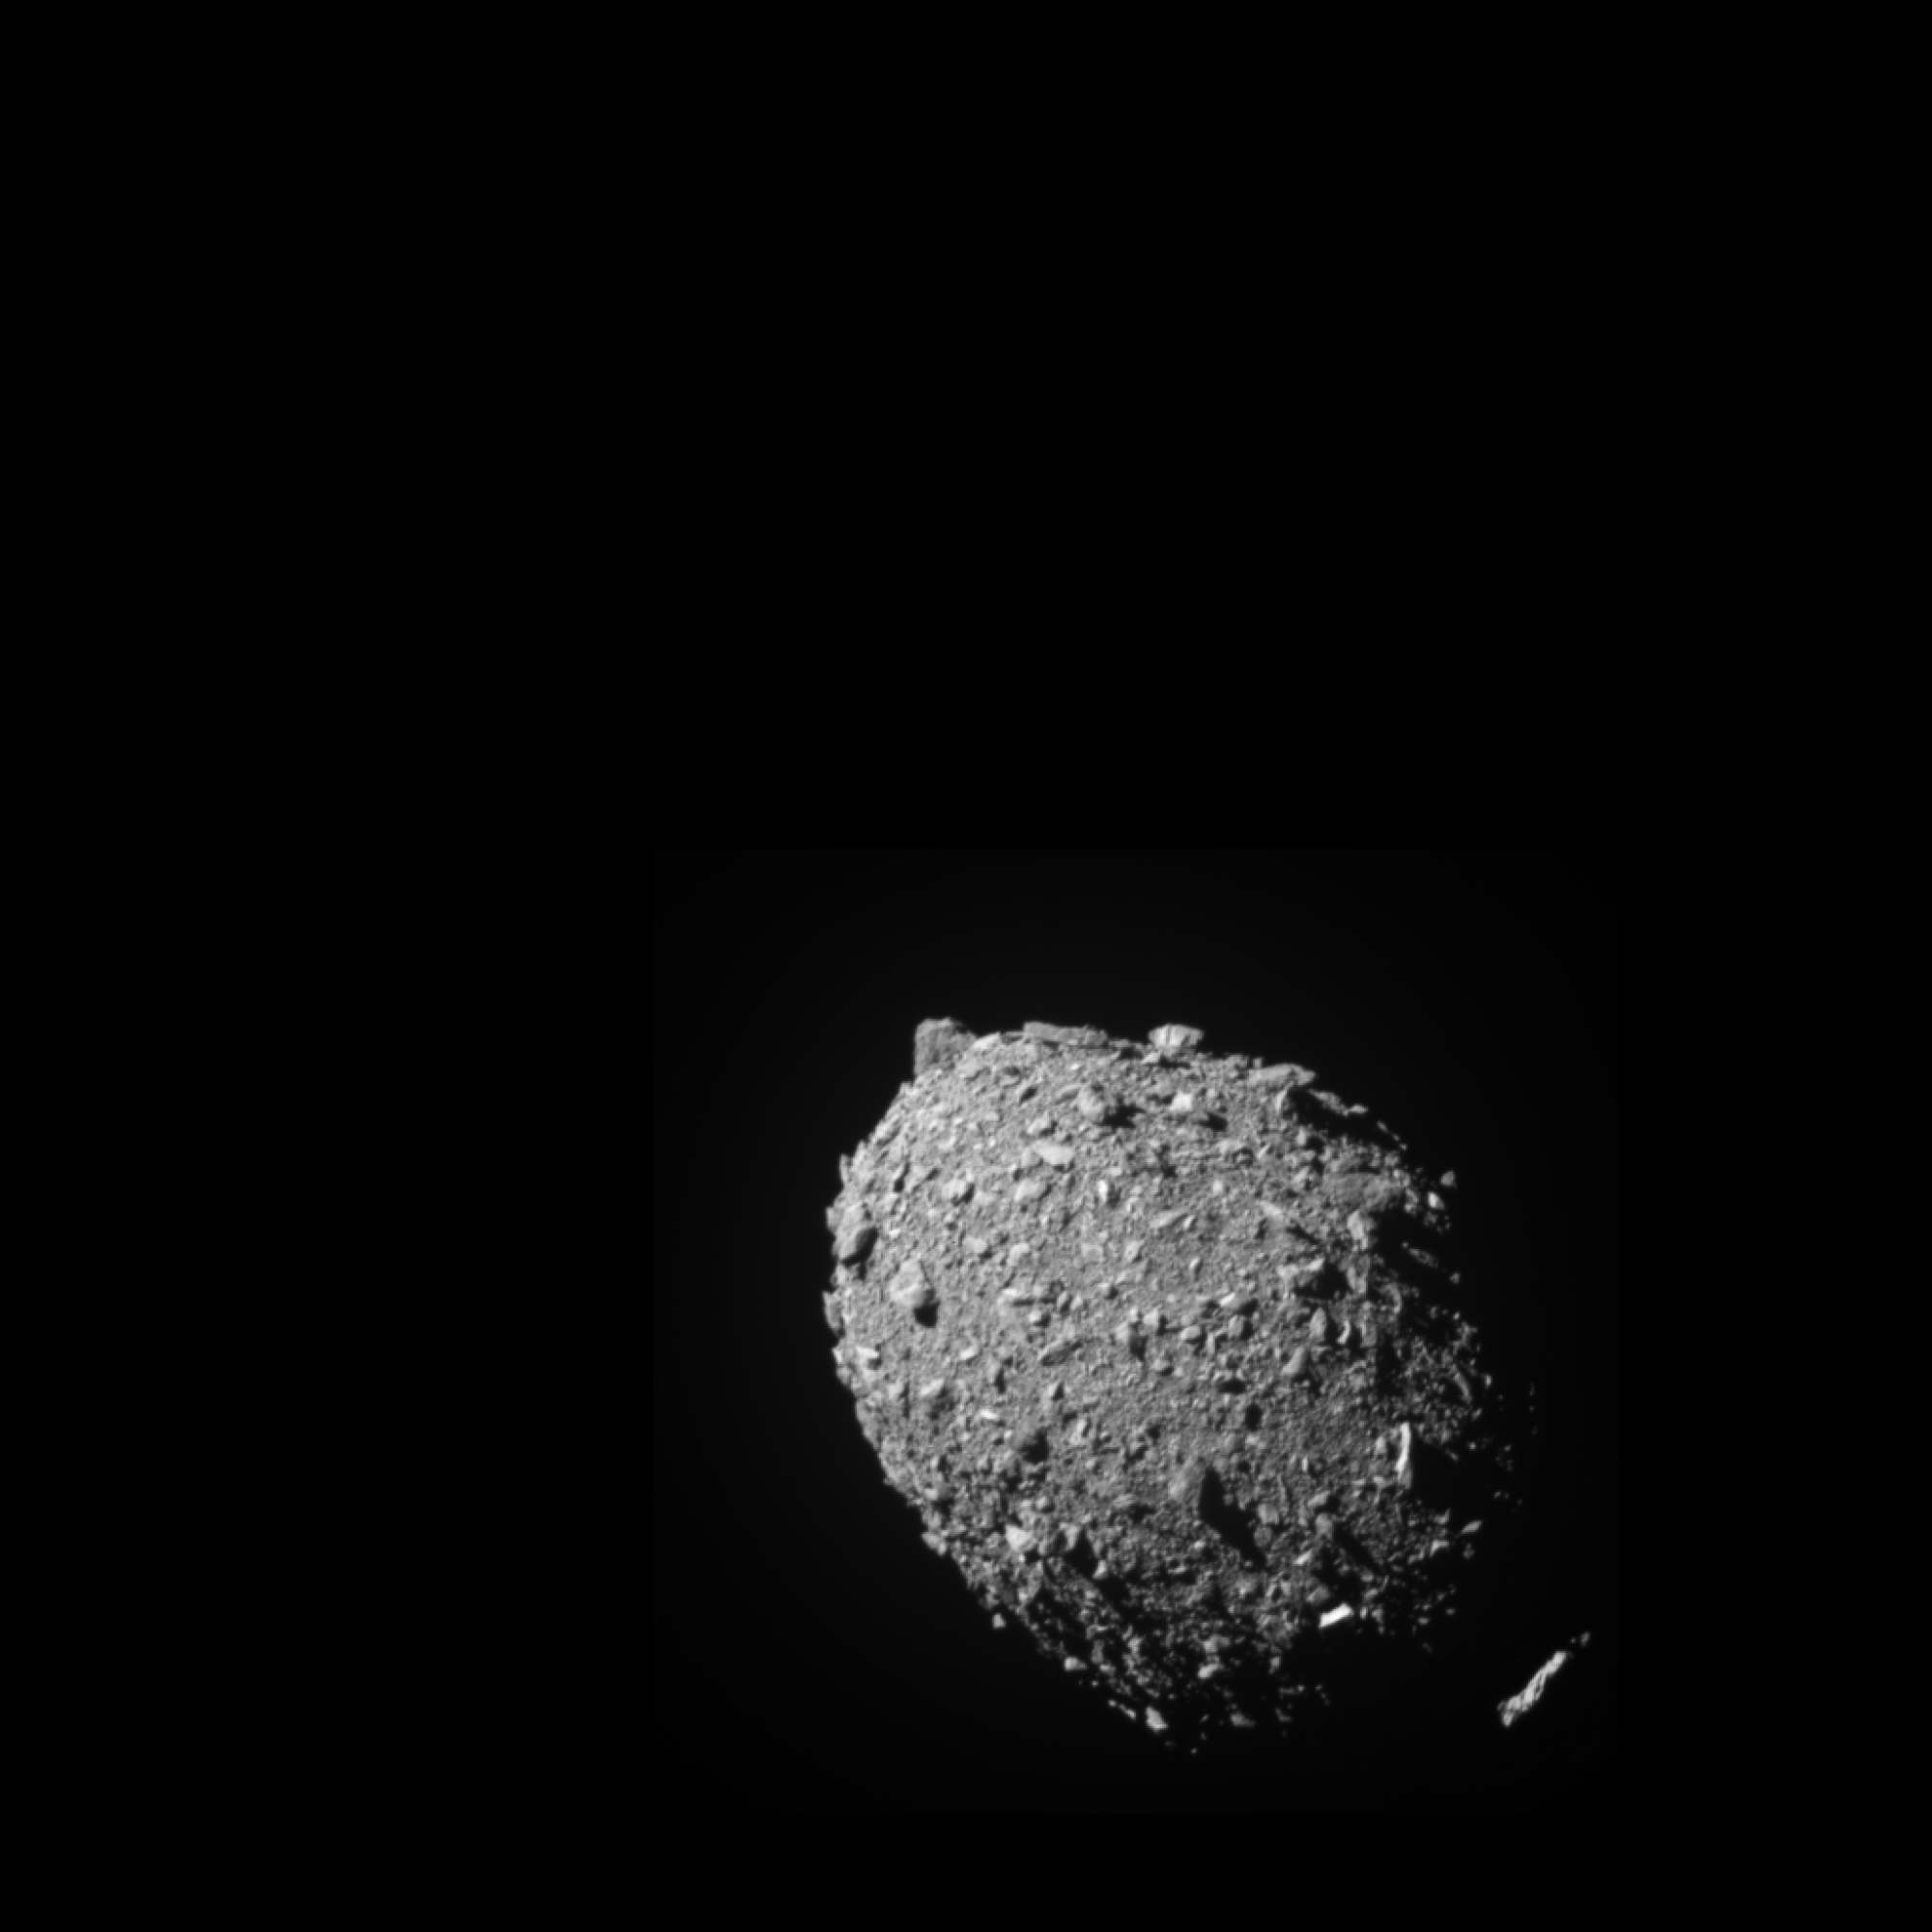 the rocky asteroid Dimorphos